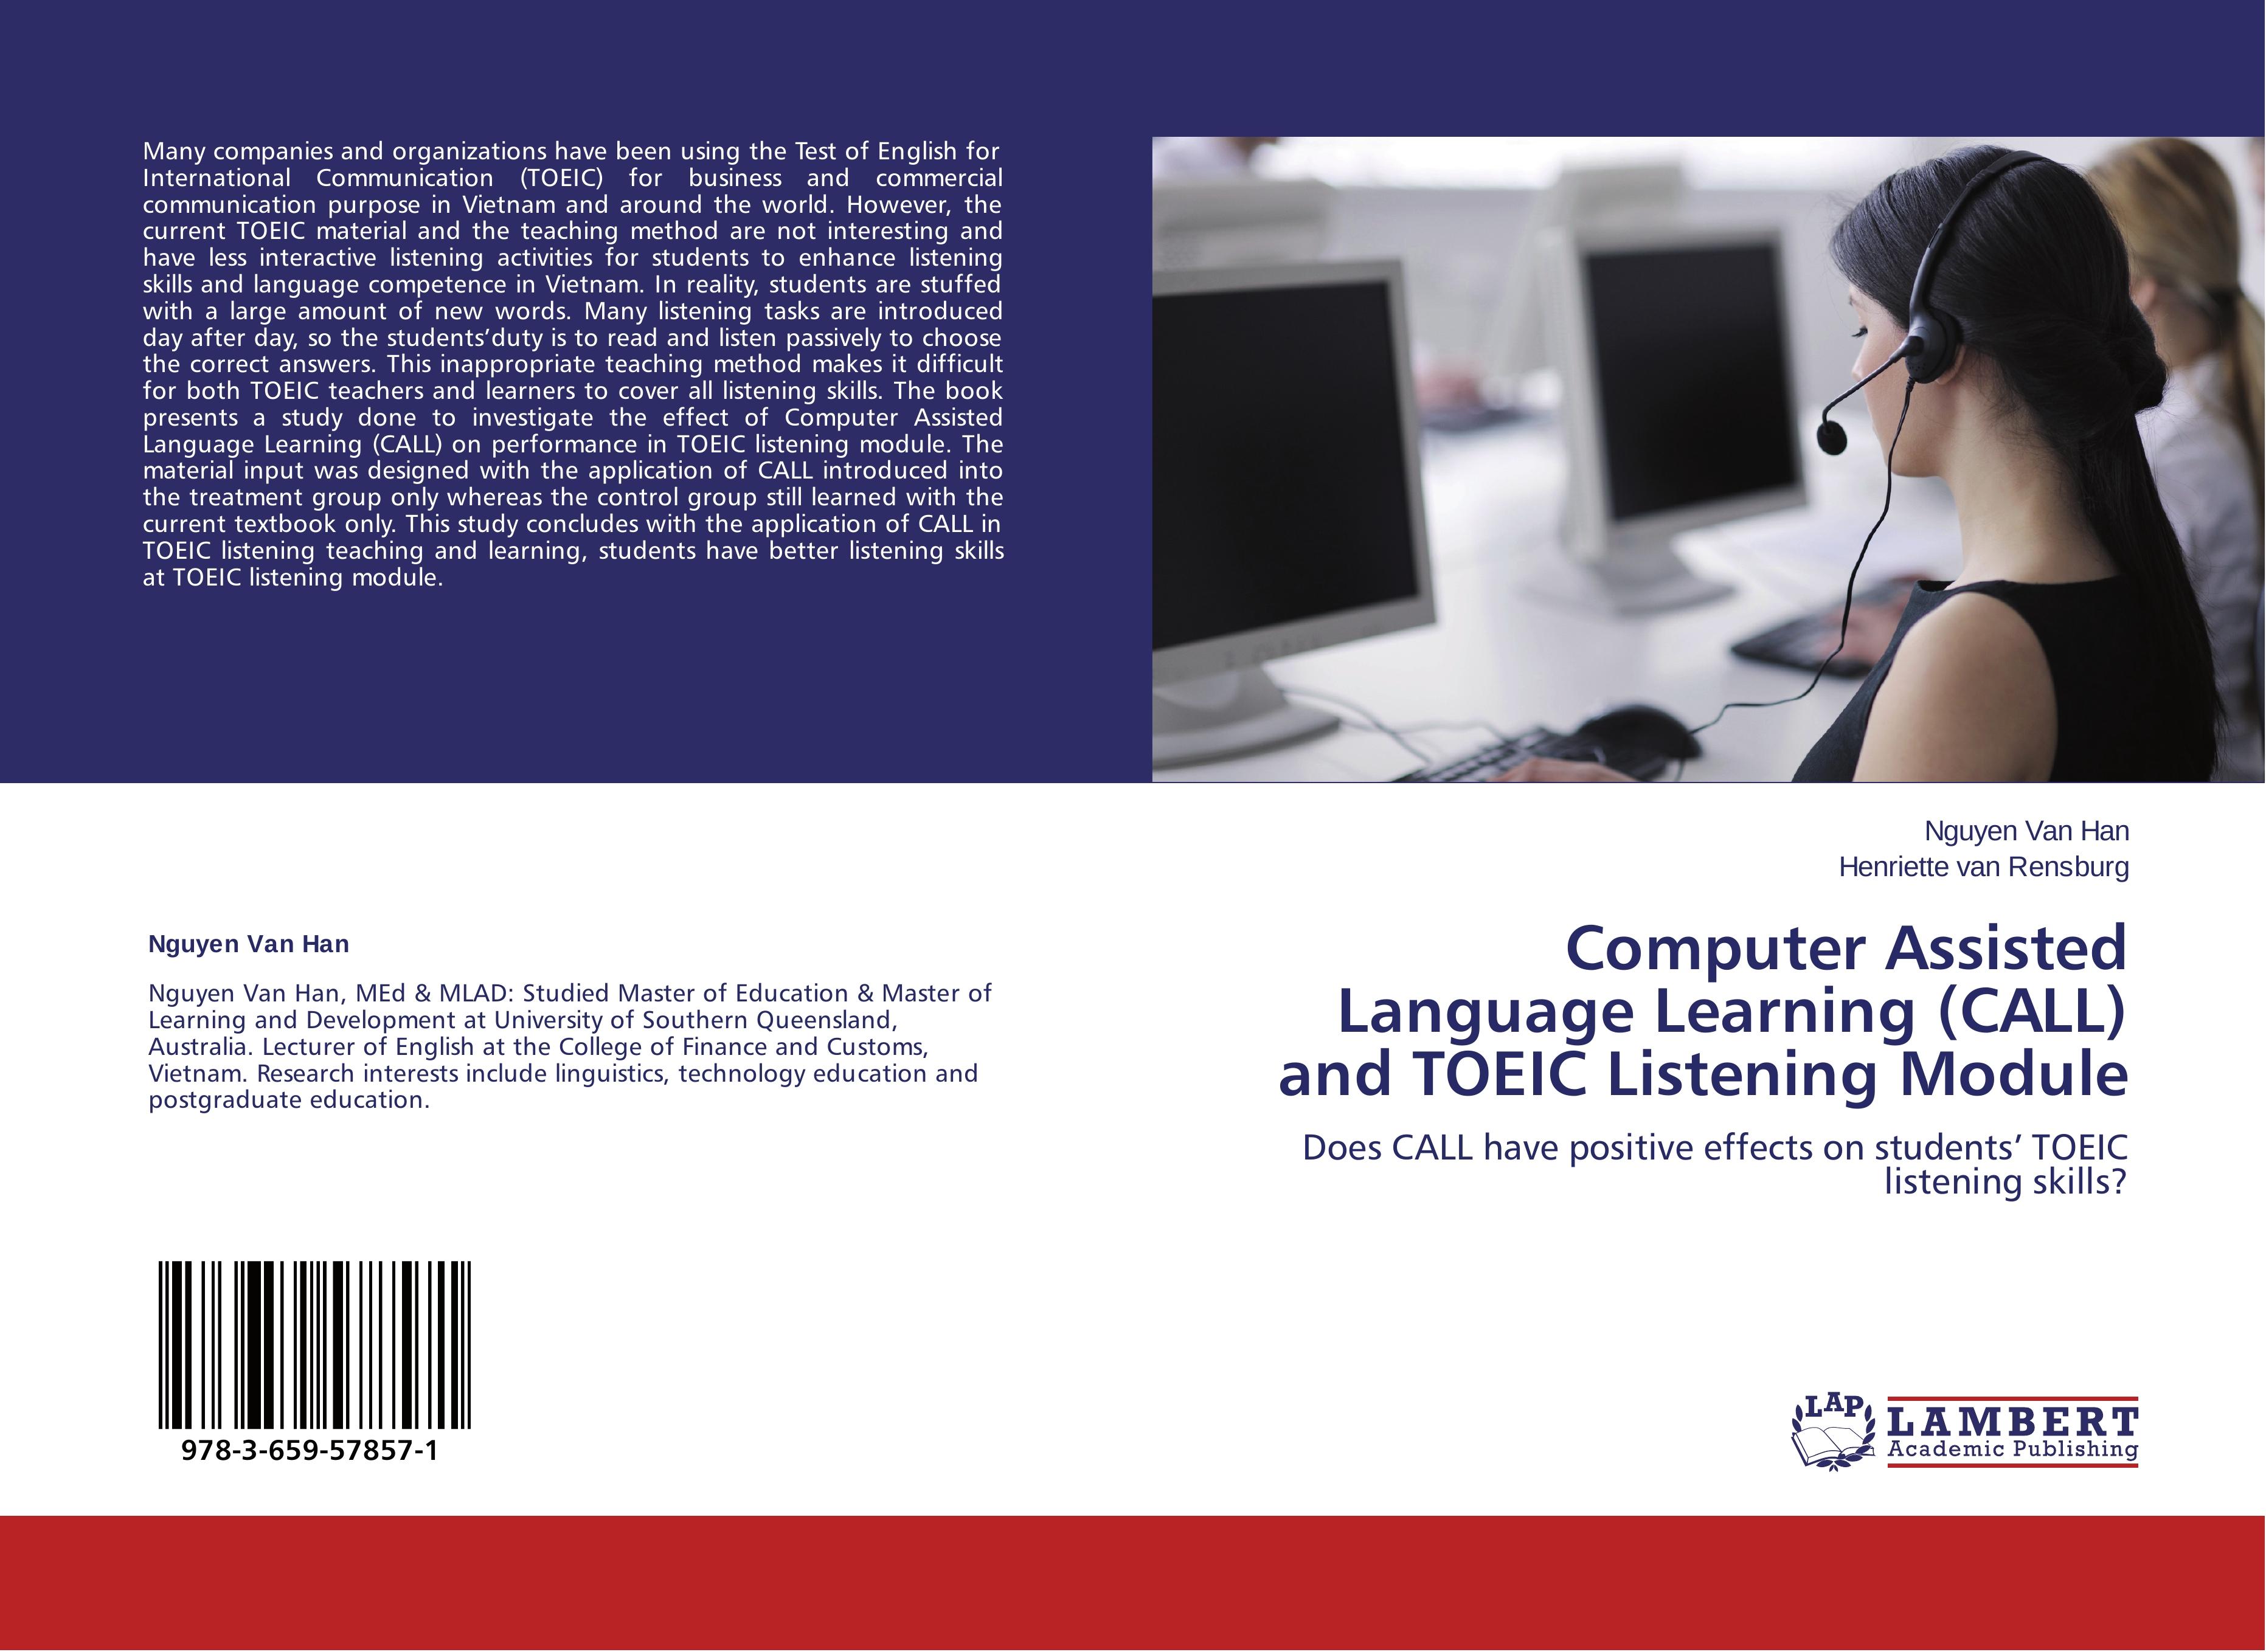 Computer Assisted Language Learning (CALL) and TOEIC Listening Module - Nguyen Van Han|Henriette van Rensburg